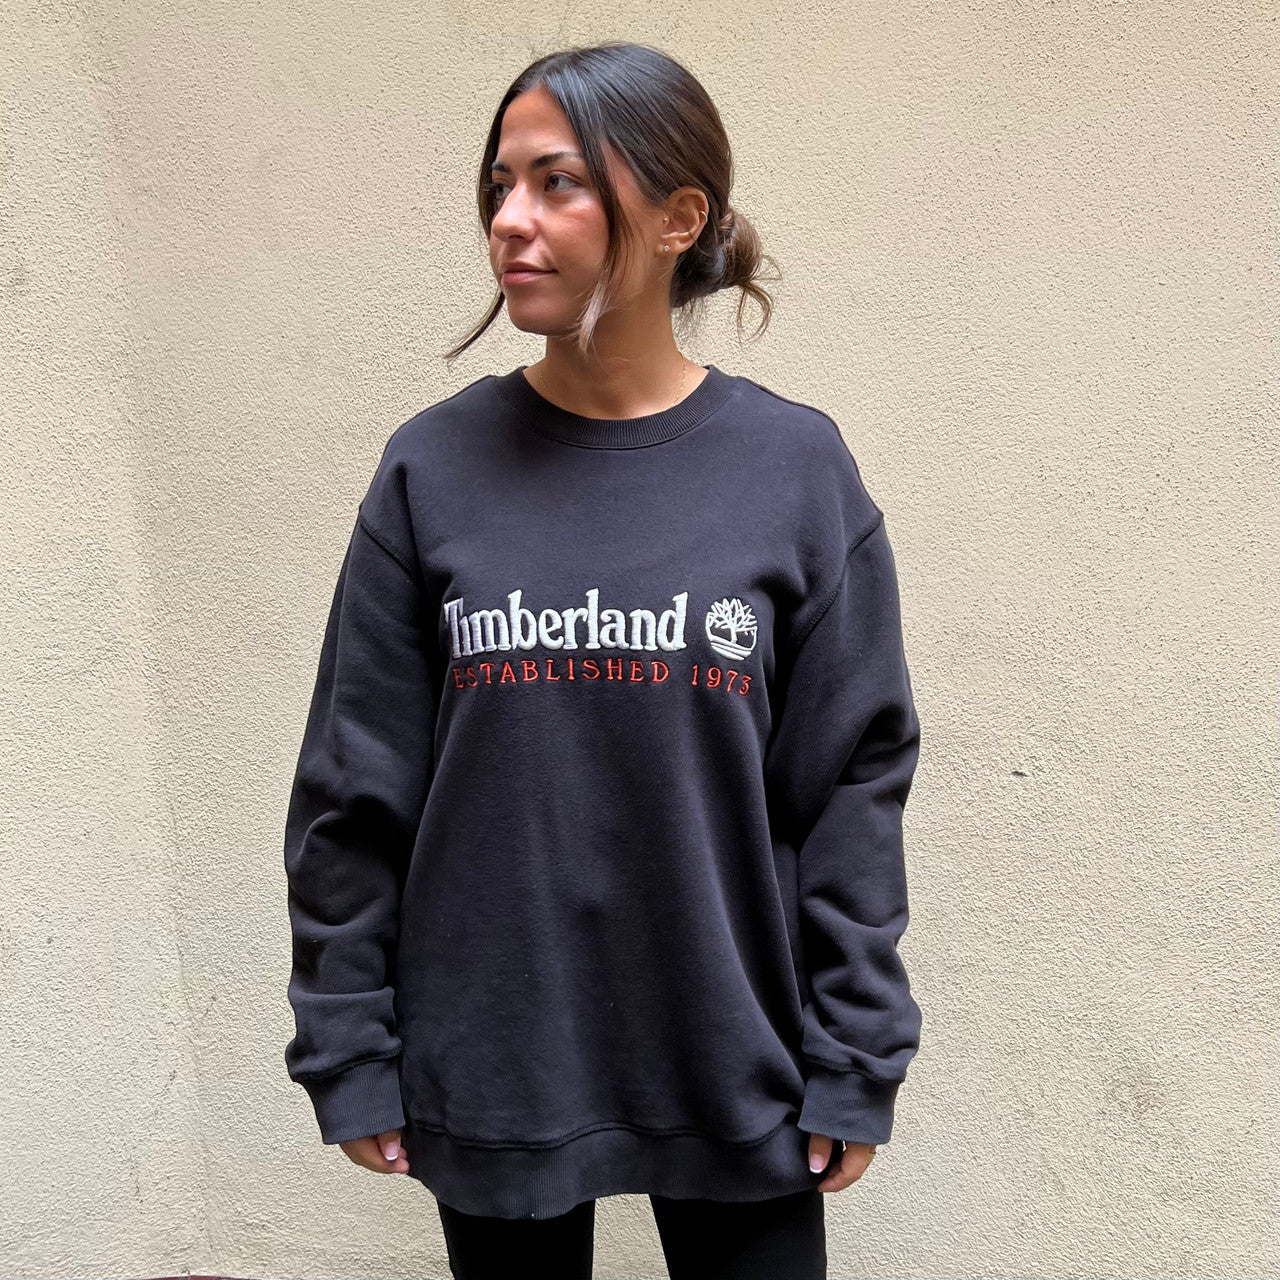 Timberland Logo Crewneck Sweatshirt